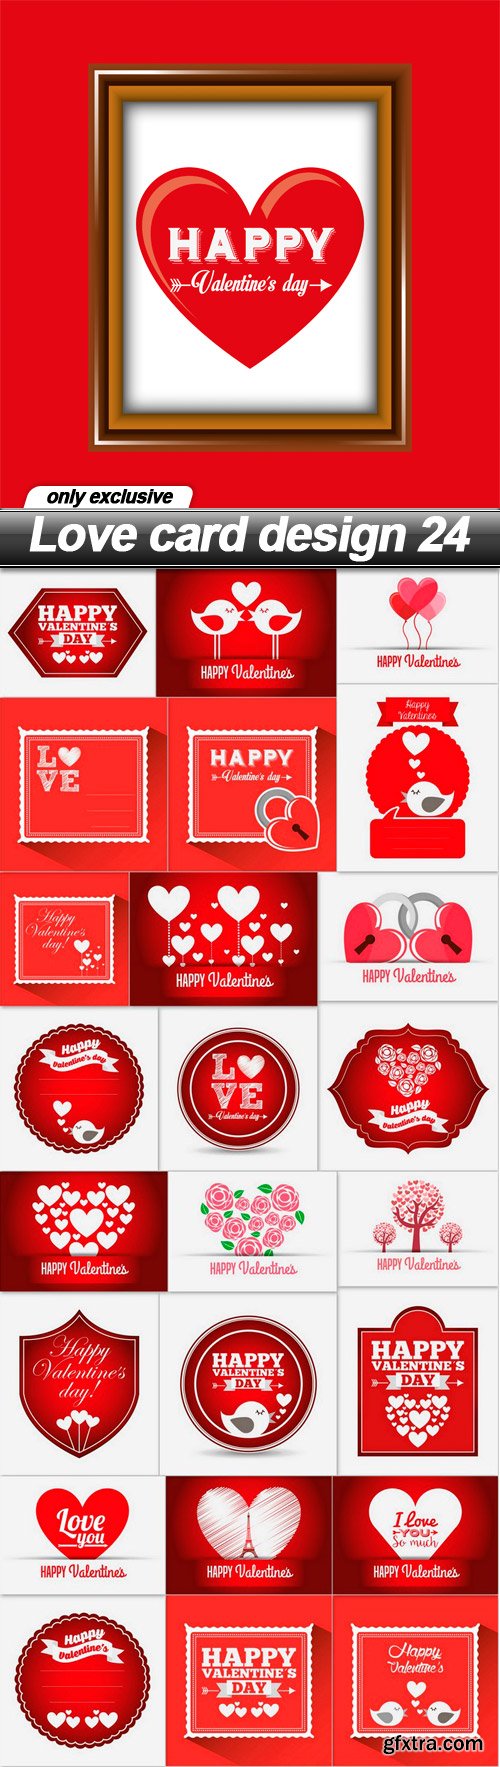 Love card design 24 - 25 EPS